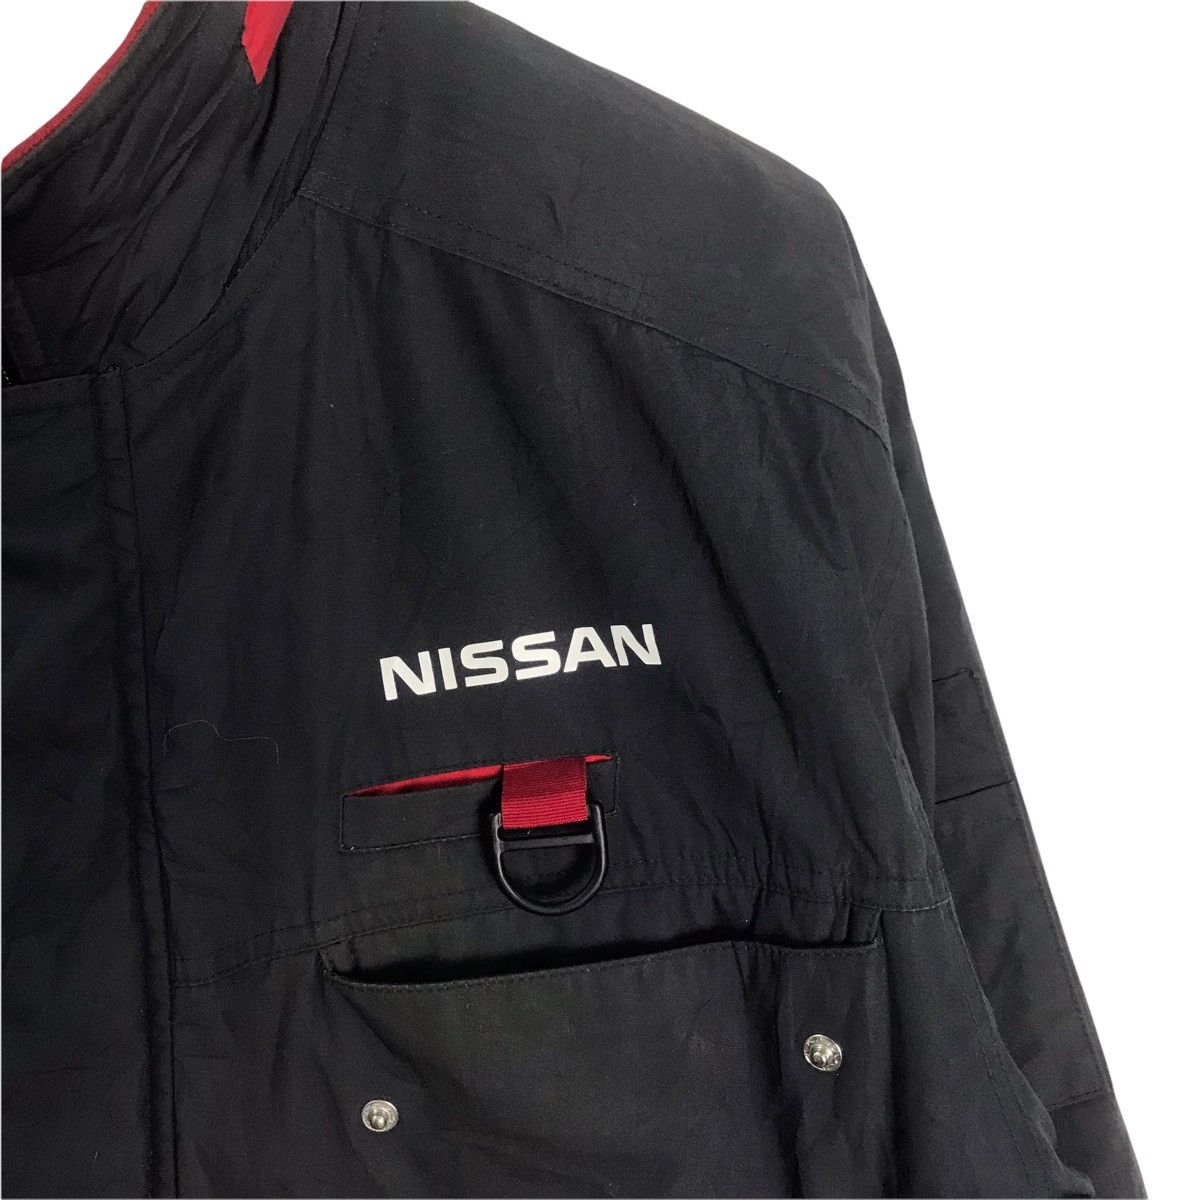 Sports Specialties - Vintage nissan Motorsport bomber jacket japan - 3